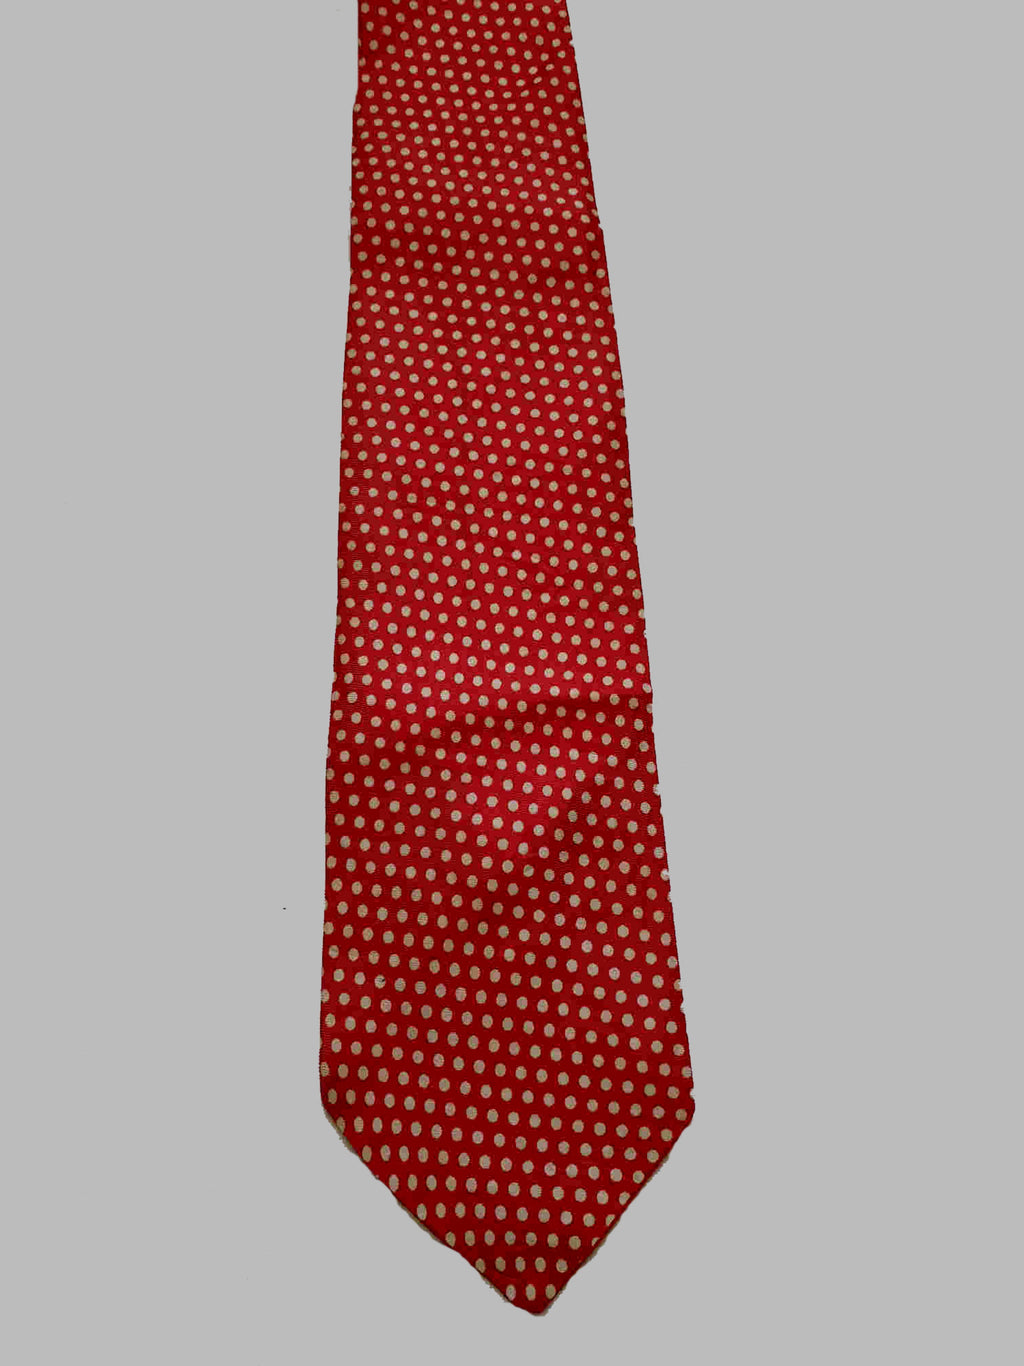 1960s vintage red polka dot rayon tie